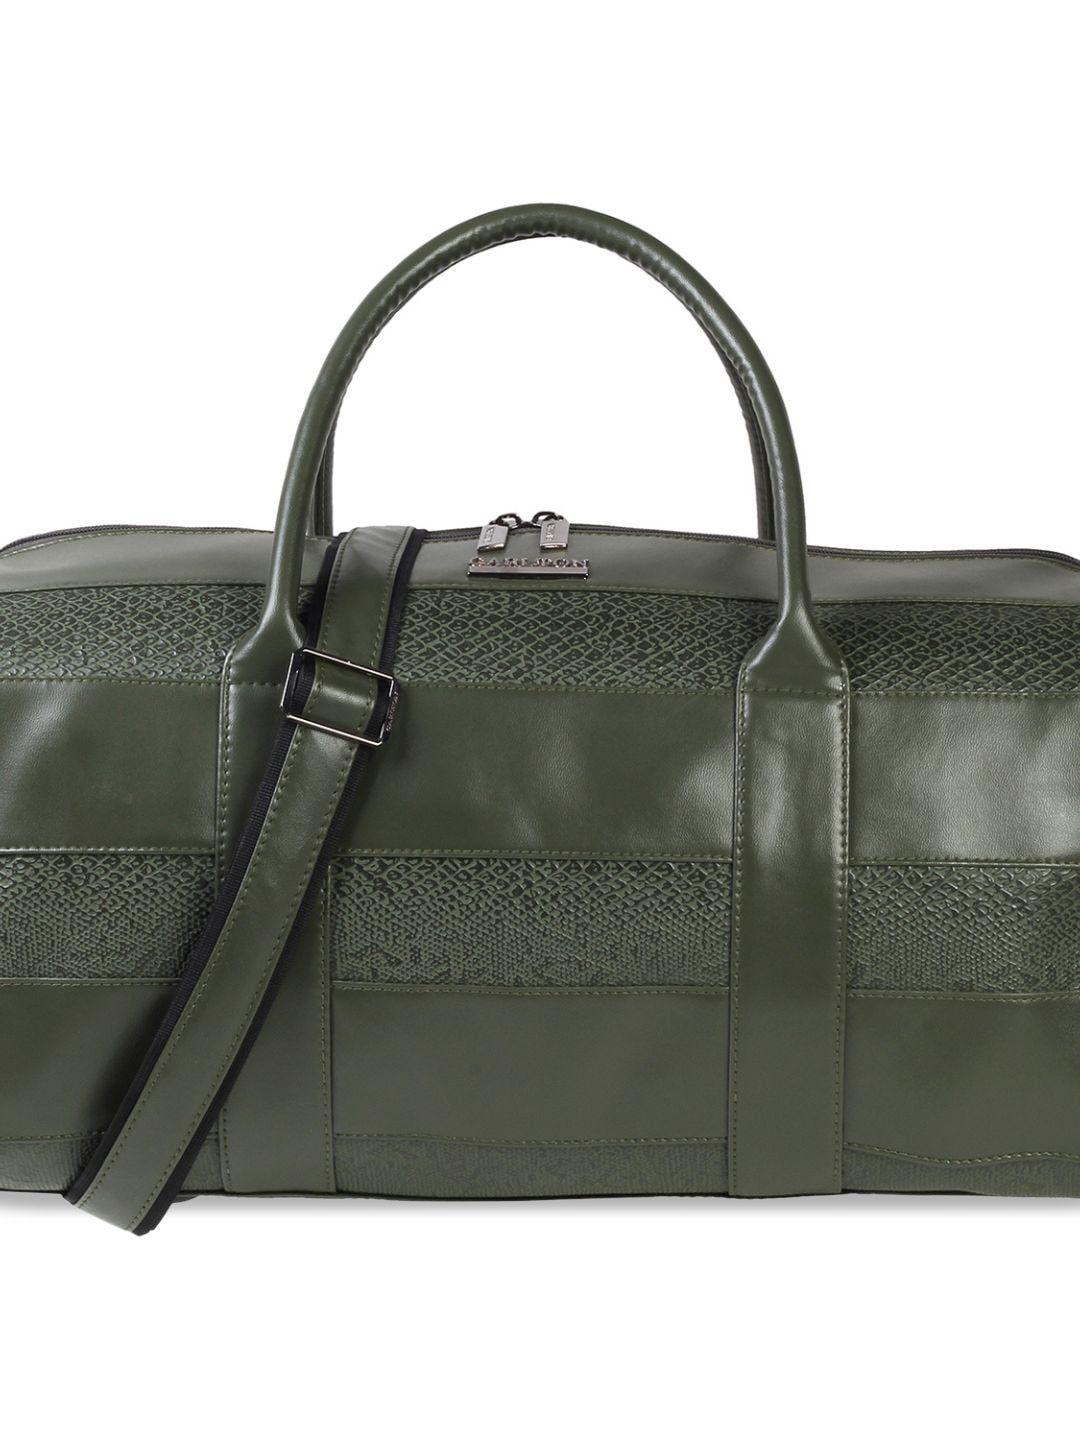 carlton london striped medium travel duffel bag